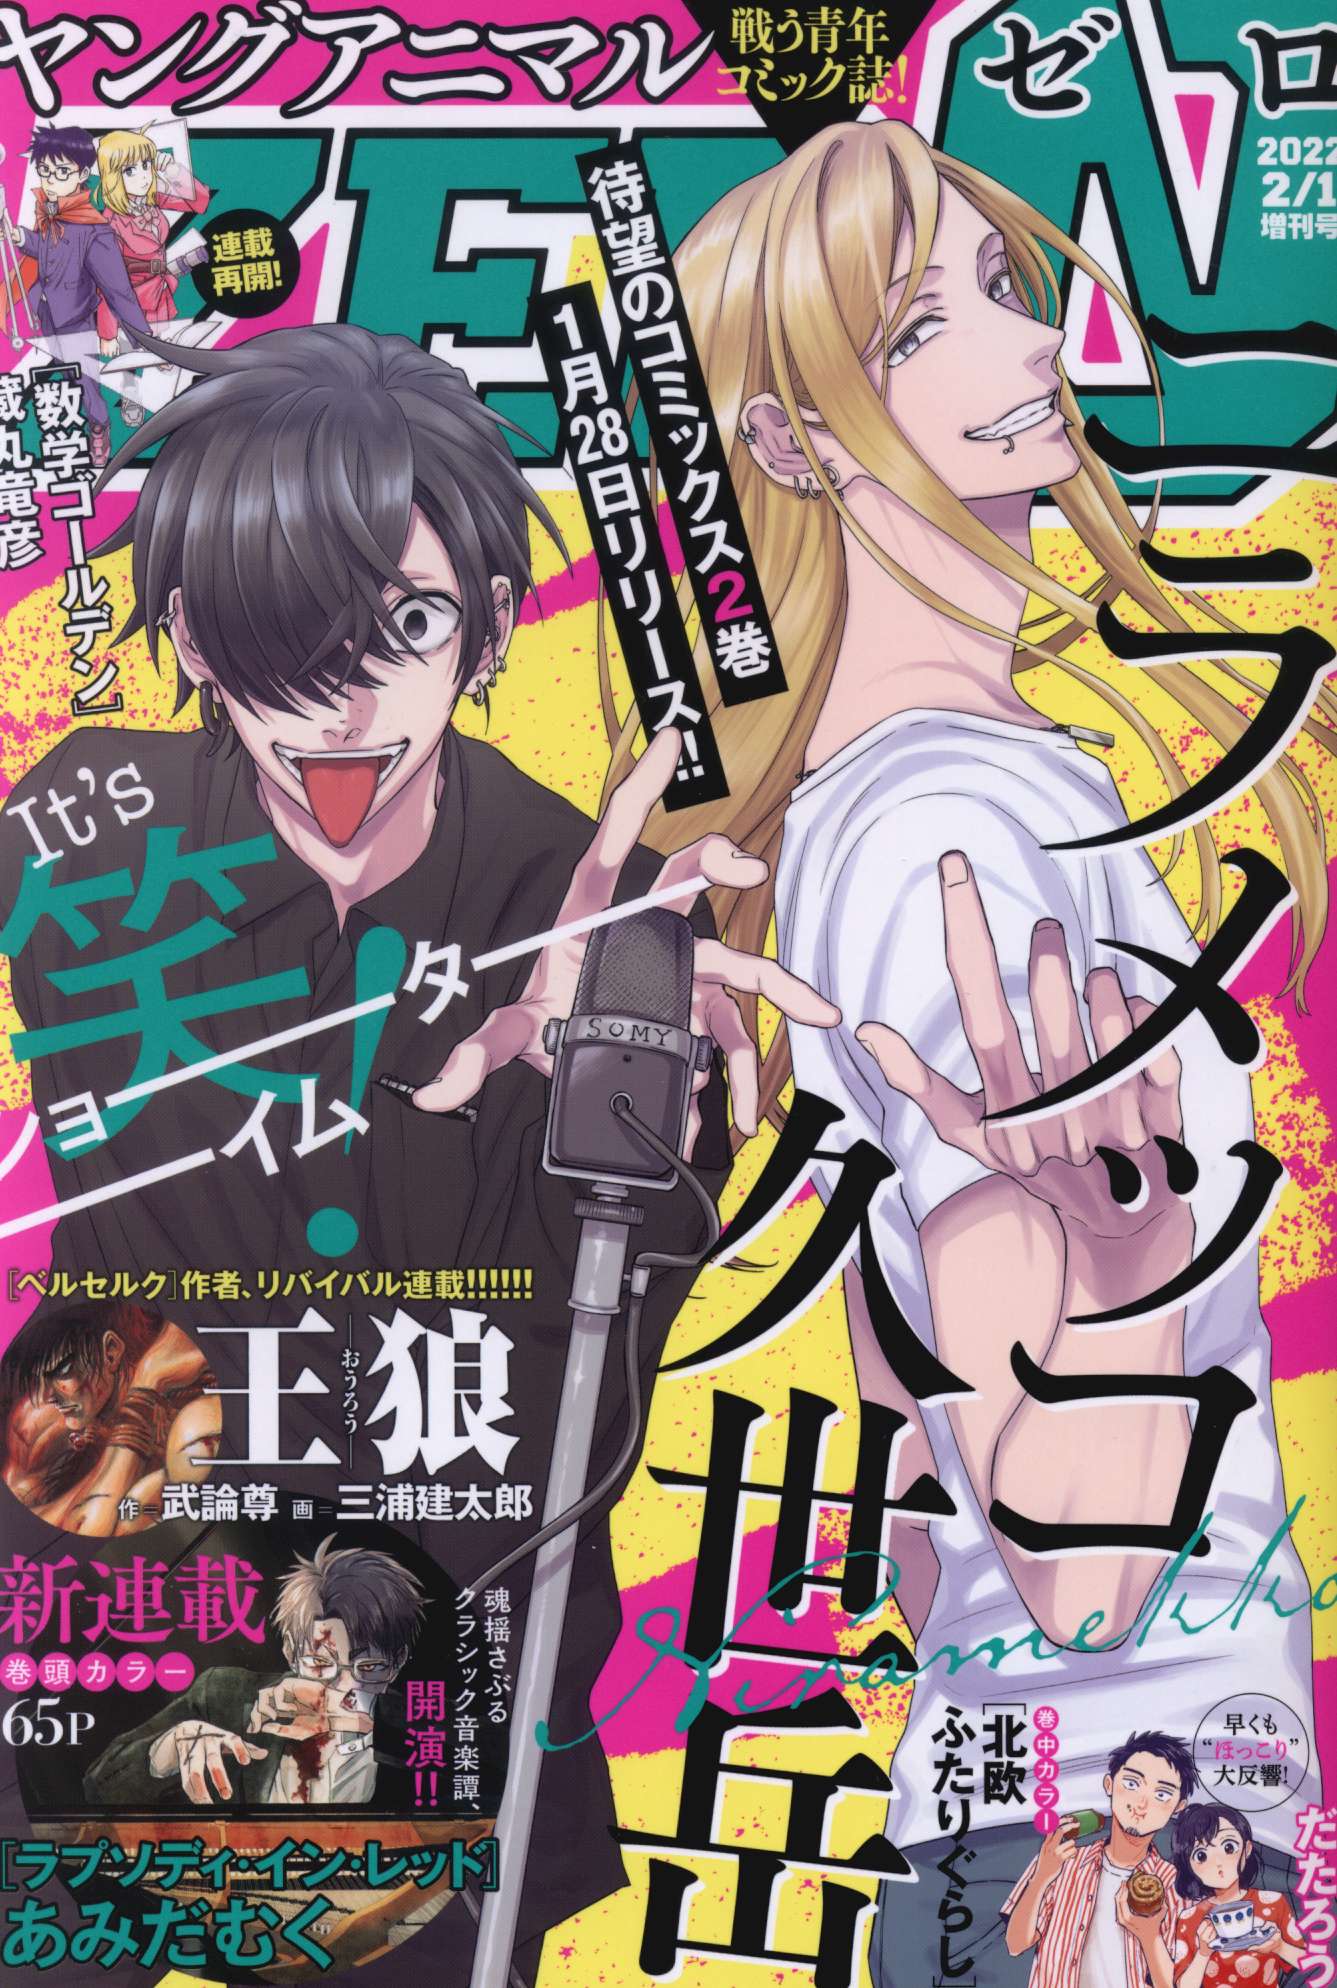 Hakusensha 2022 (Reiwa 4th year) manga magazine Young Animal Zero February  1, 2022 special issue 20220201 | Mandarake Online Shop